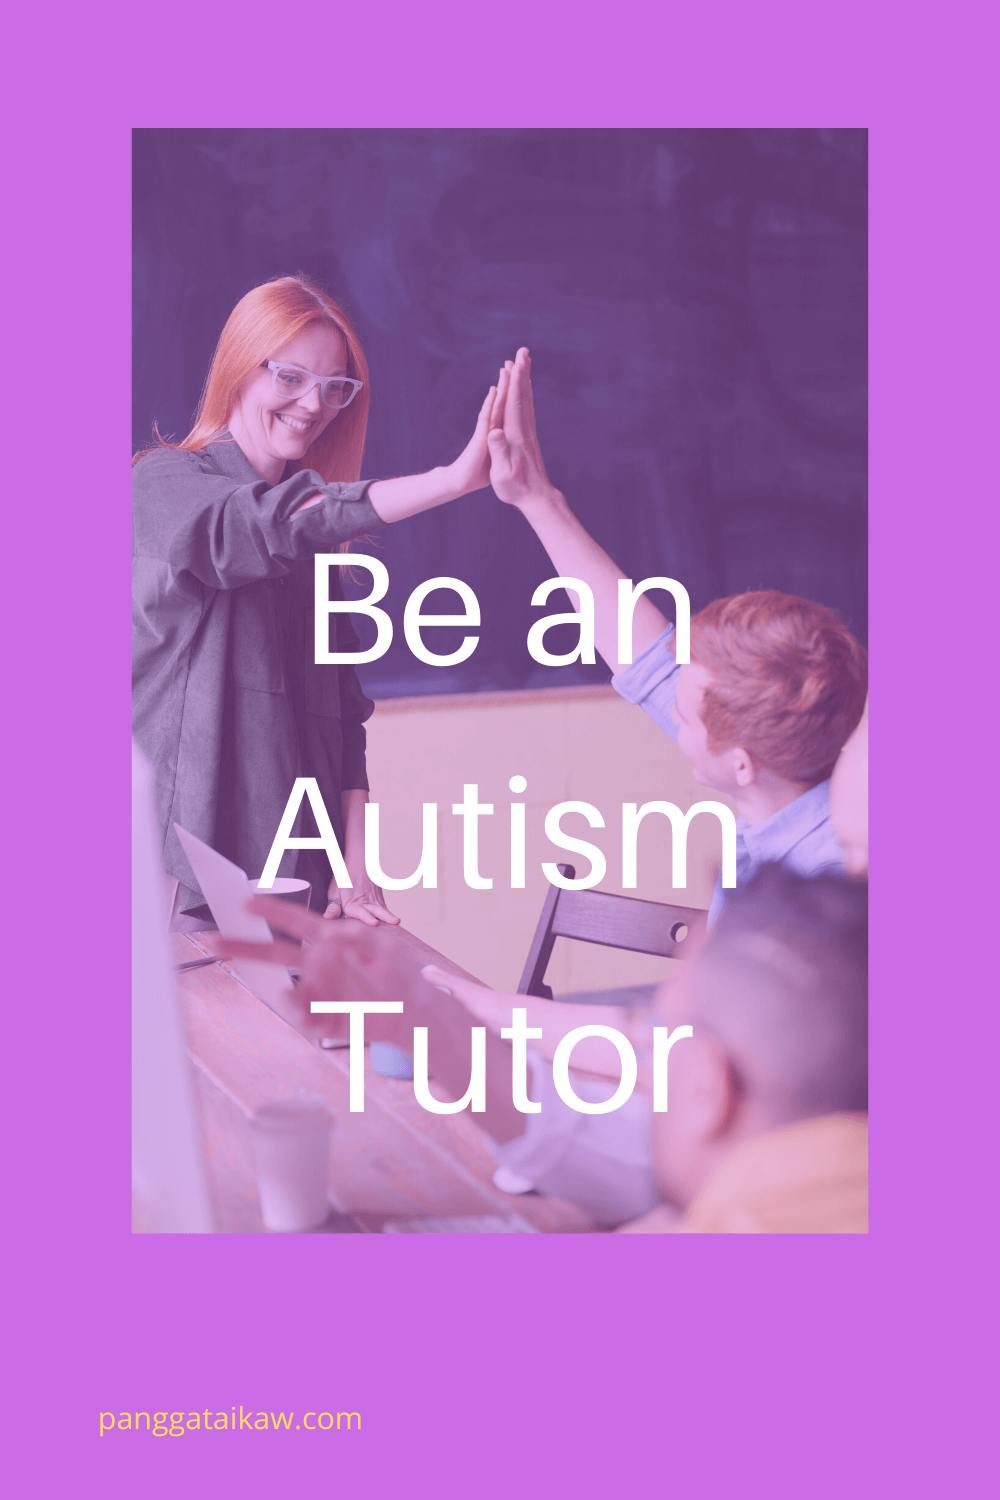 How to help autistic children